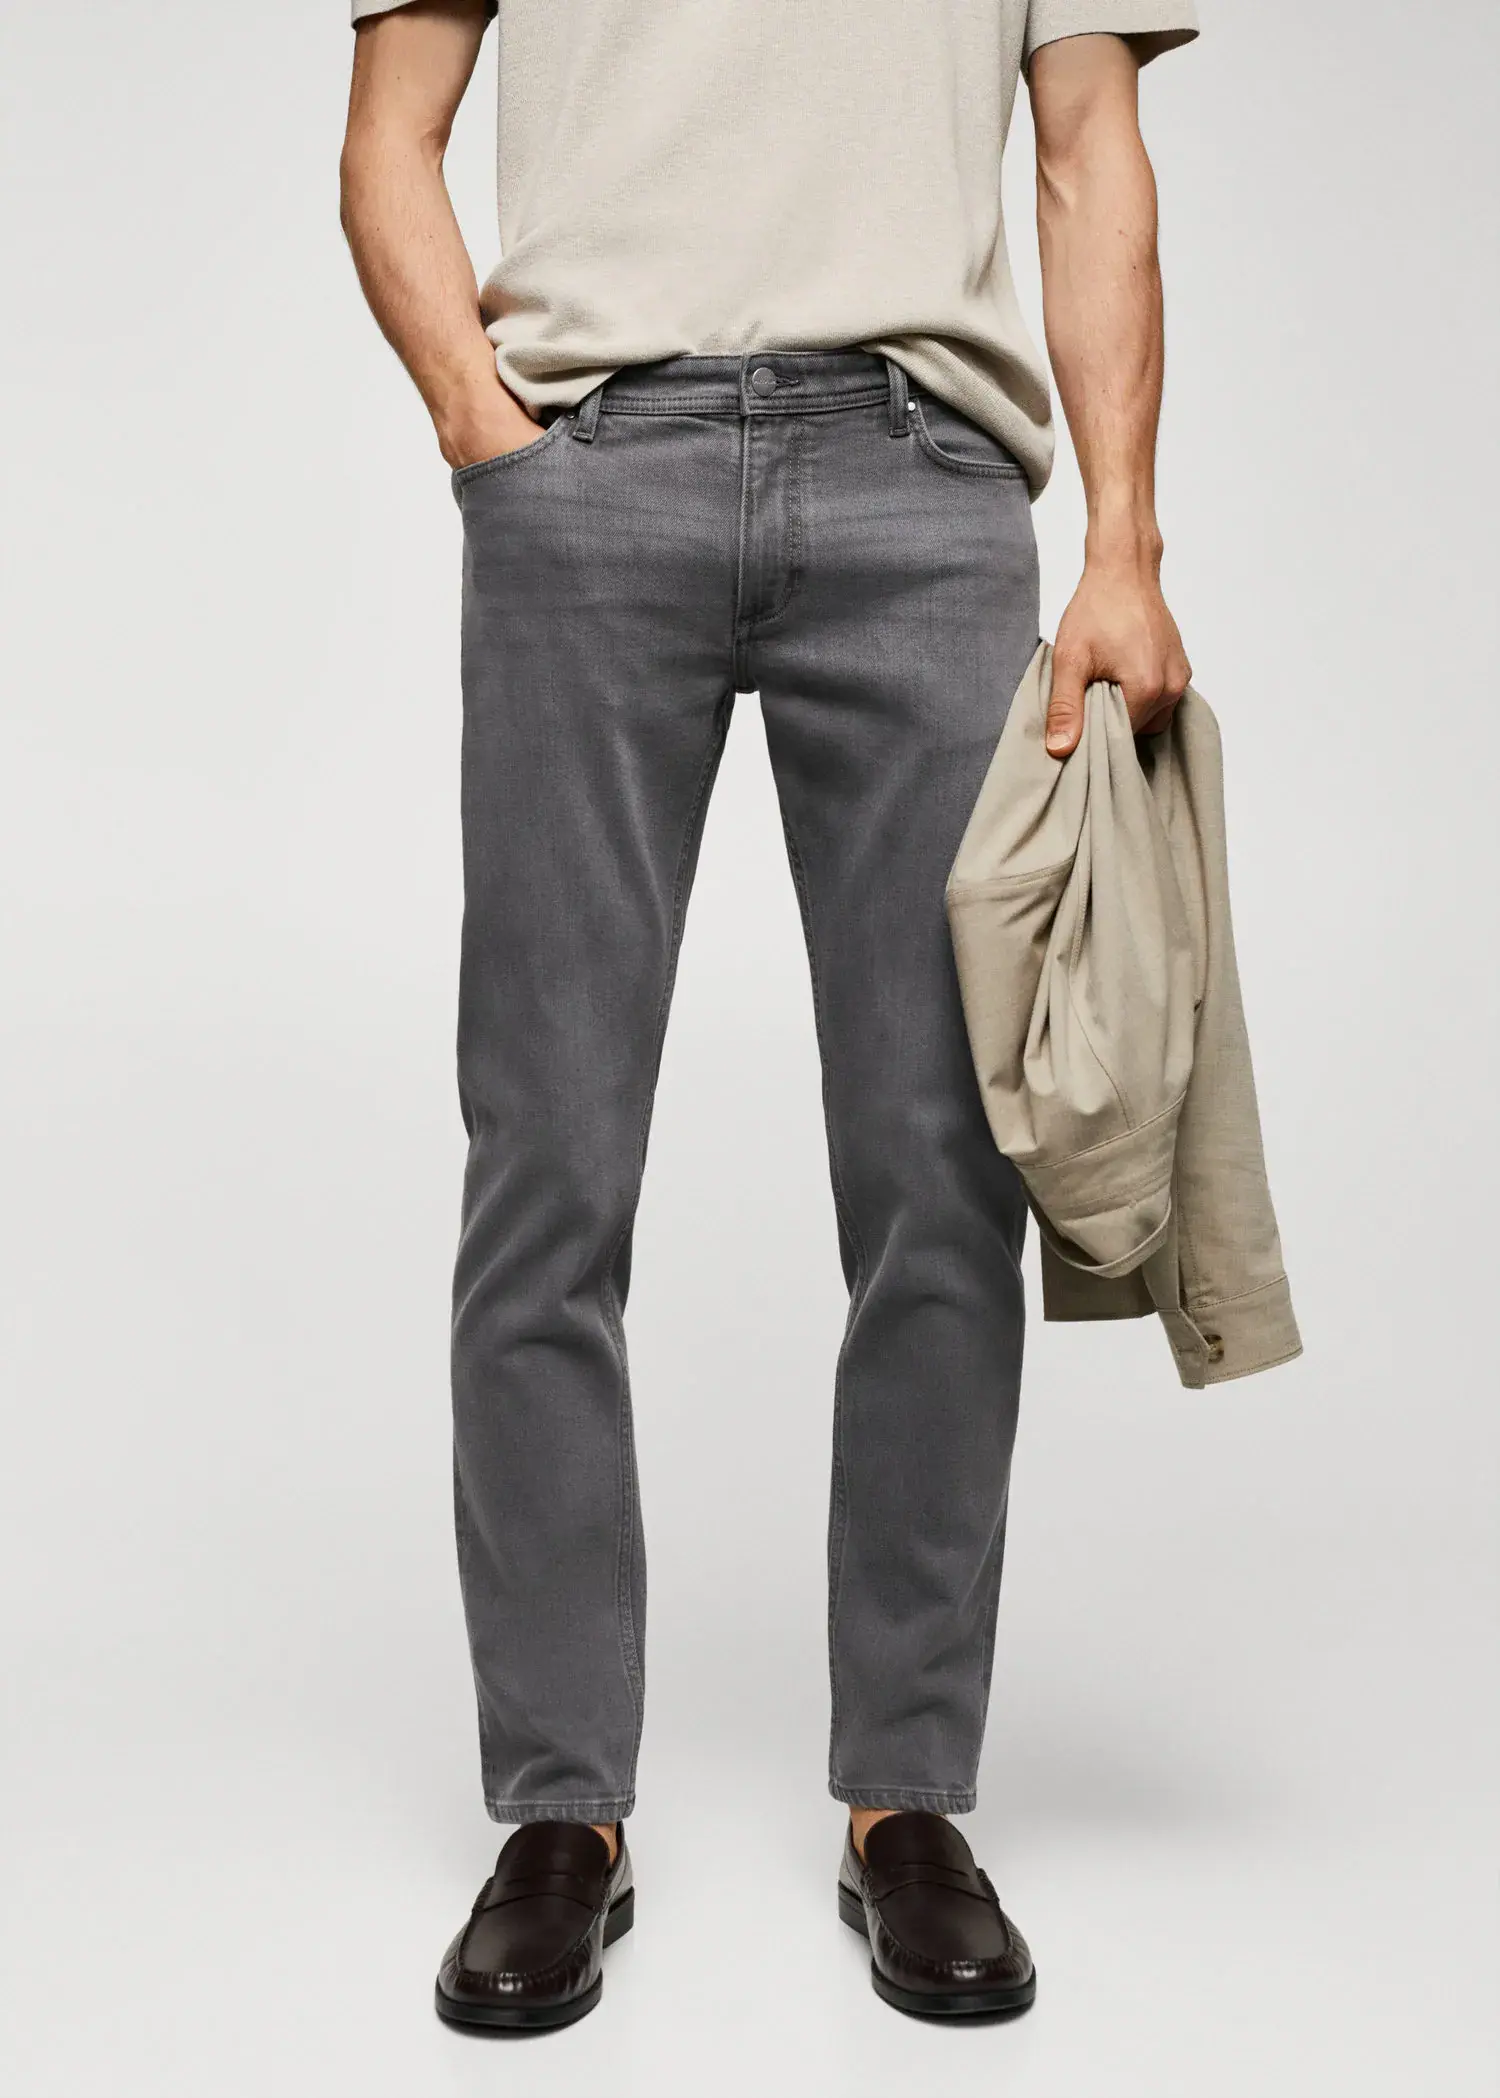 Mango Jan slim-fit jeans. a man in grey jeans holding a jacket. 